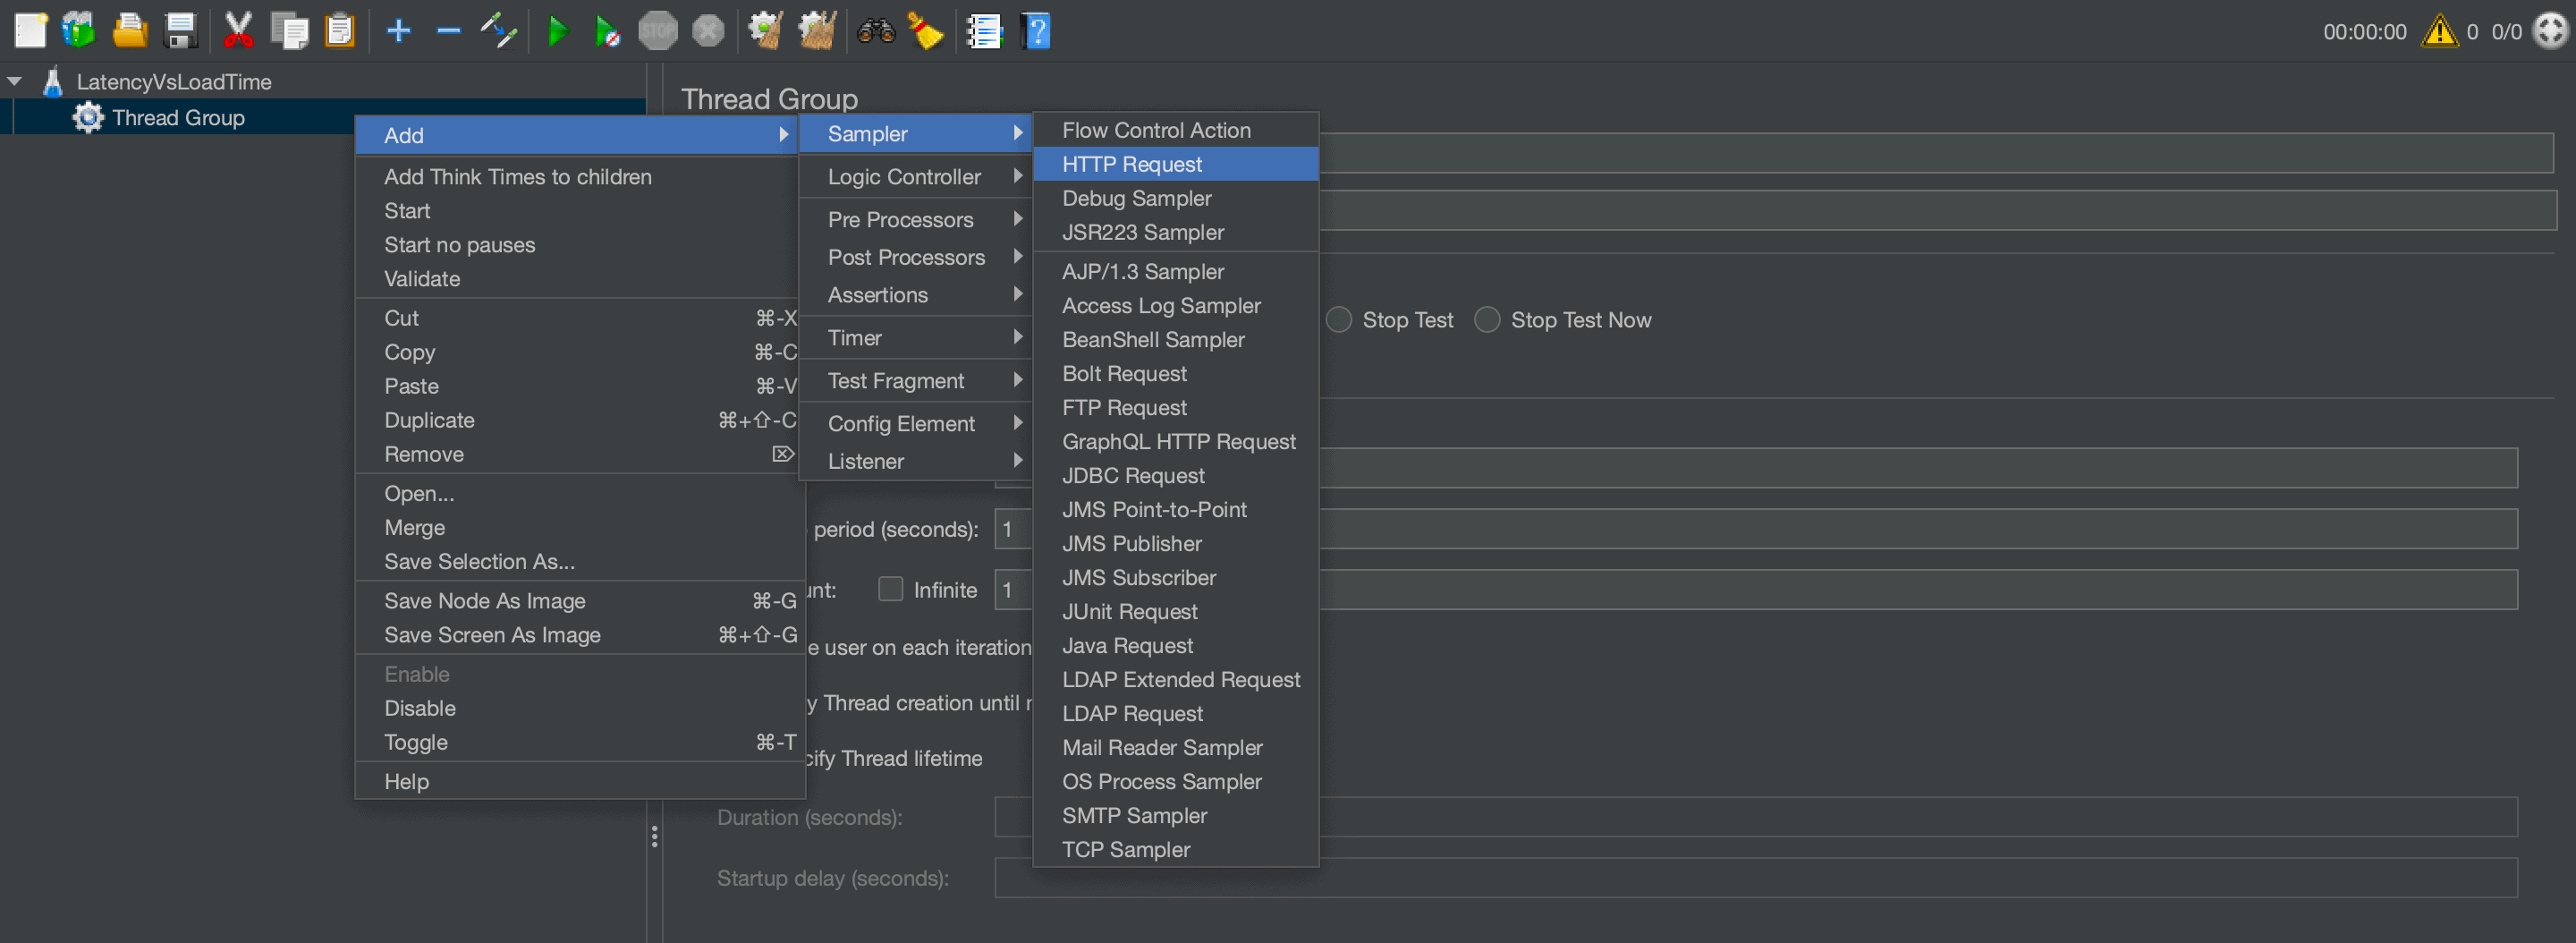 JMeter screenshot on how to create an http request sampler